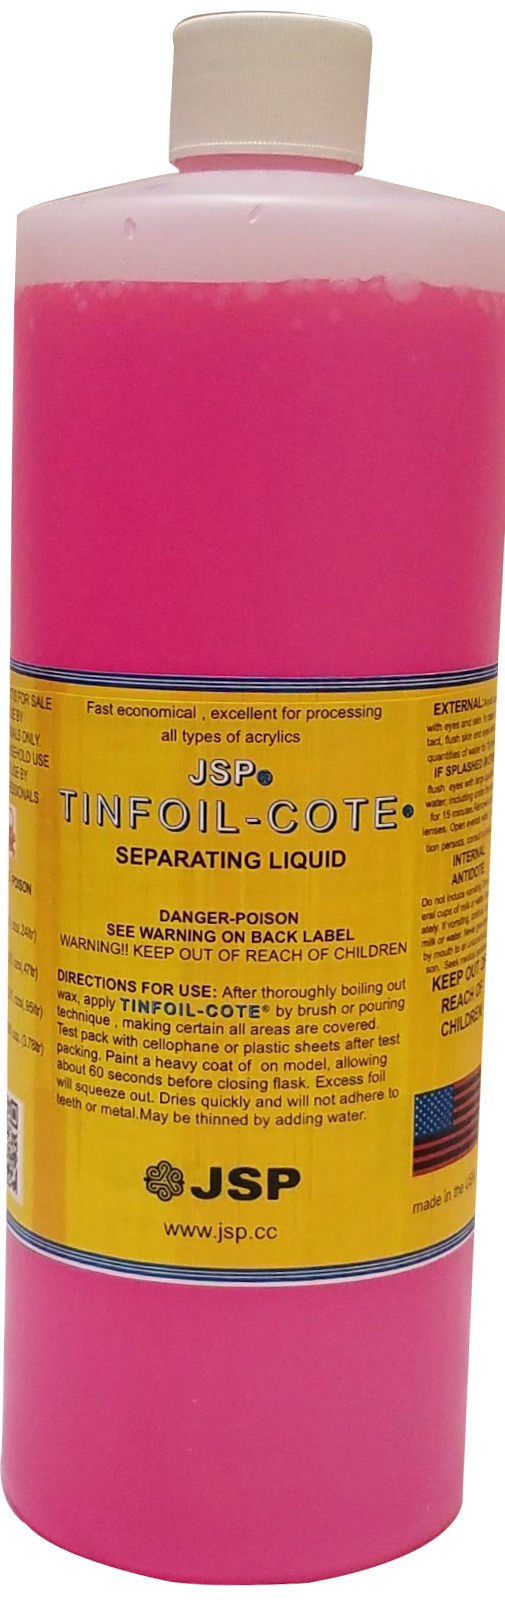 JSP® TINFOIL-COTE SEPARATING LIQUID (thick)16 ozs - Click Image to Close